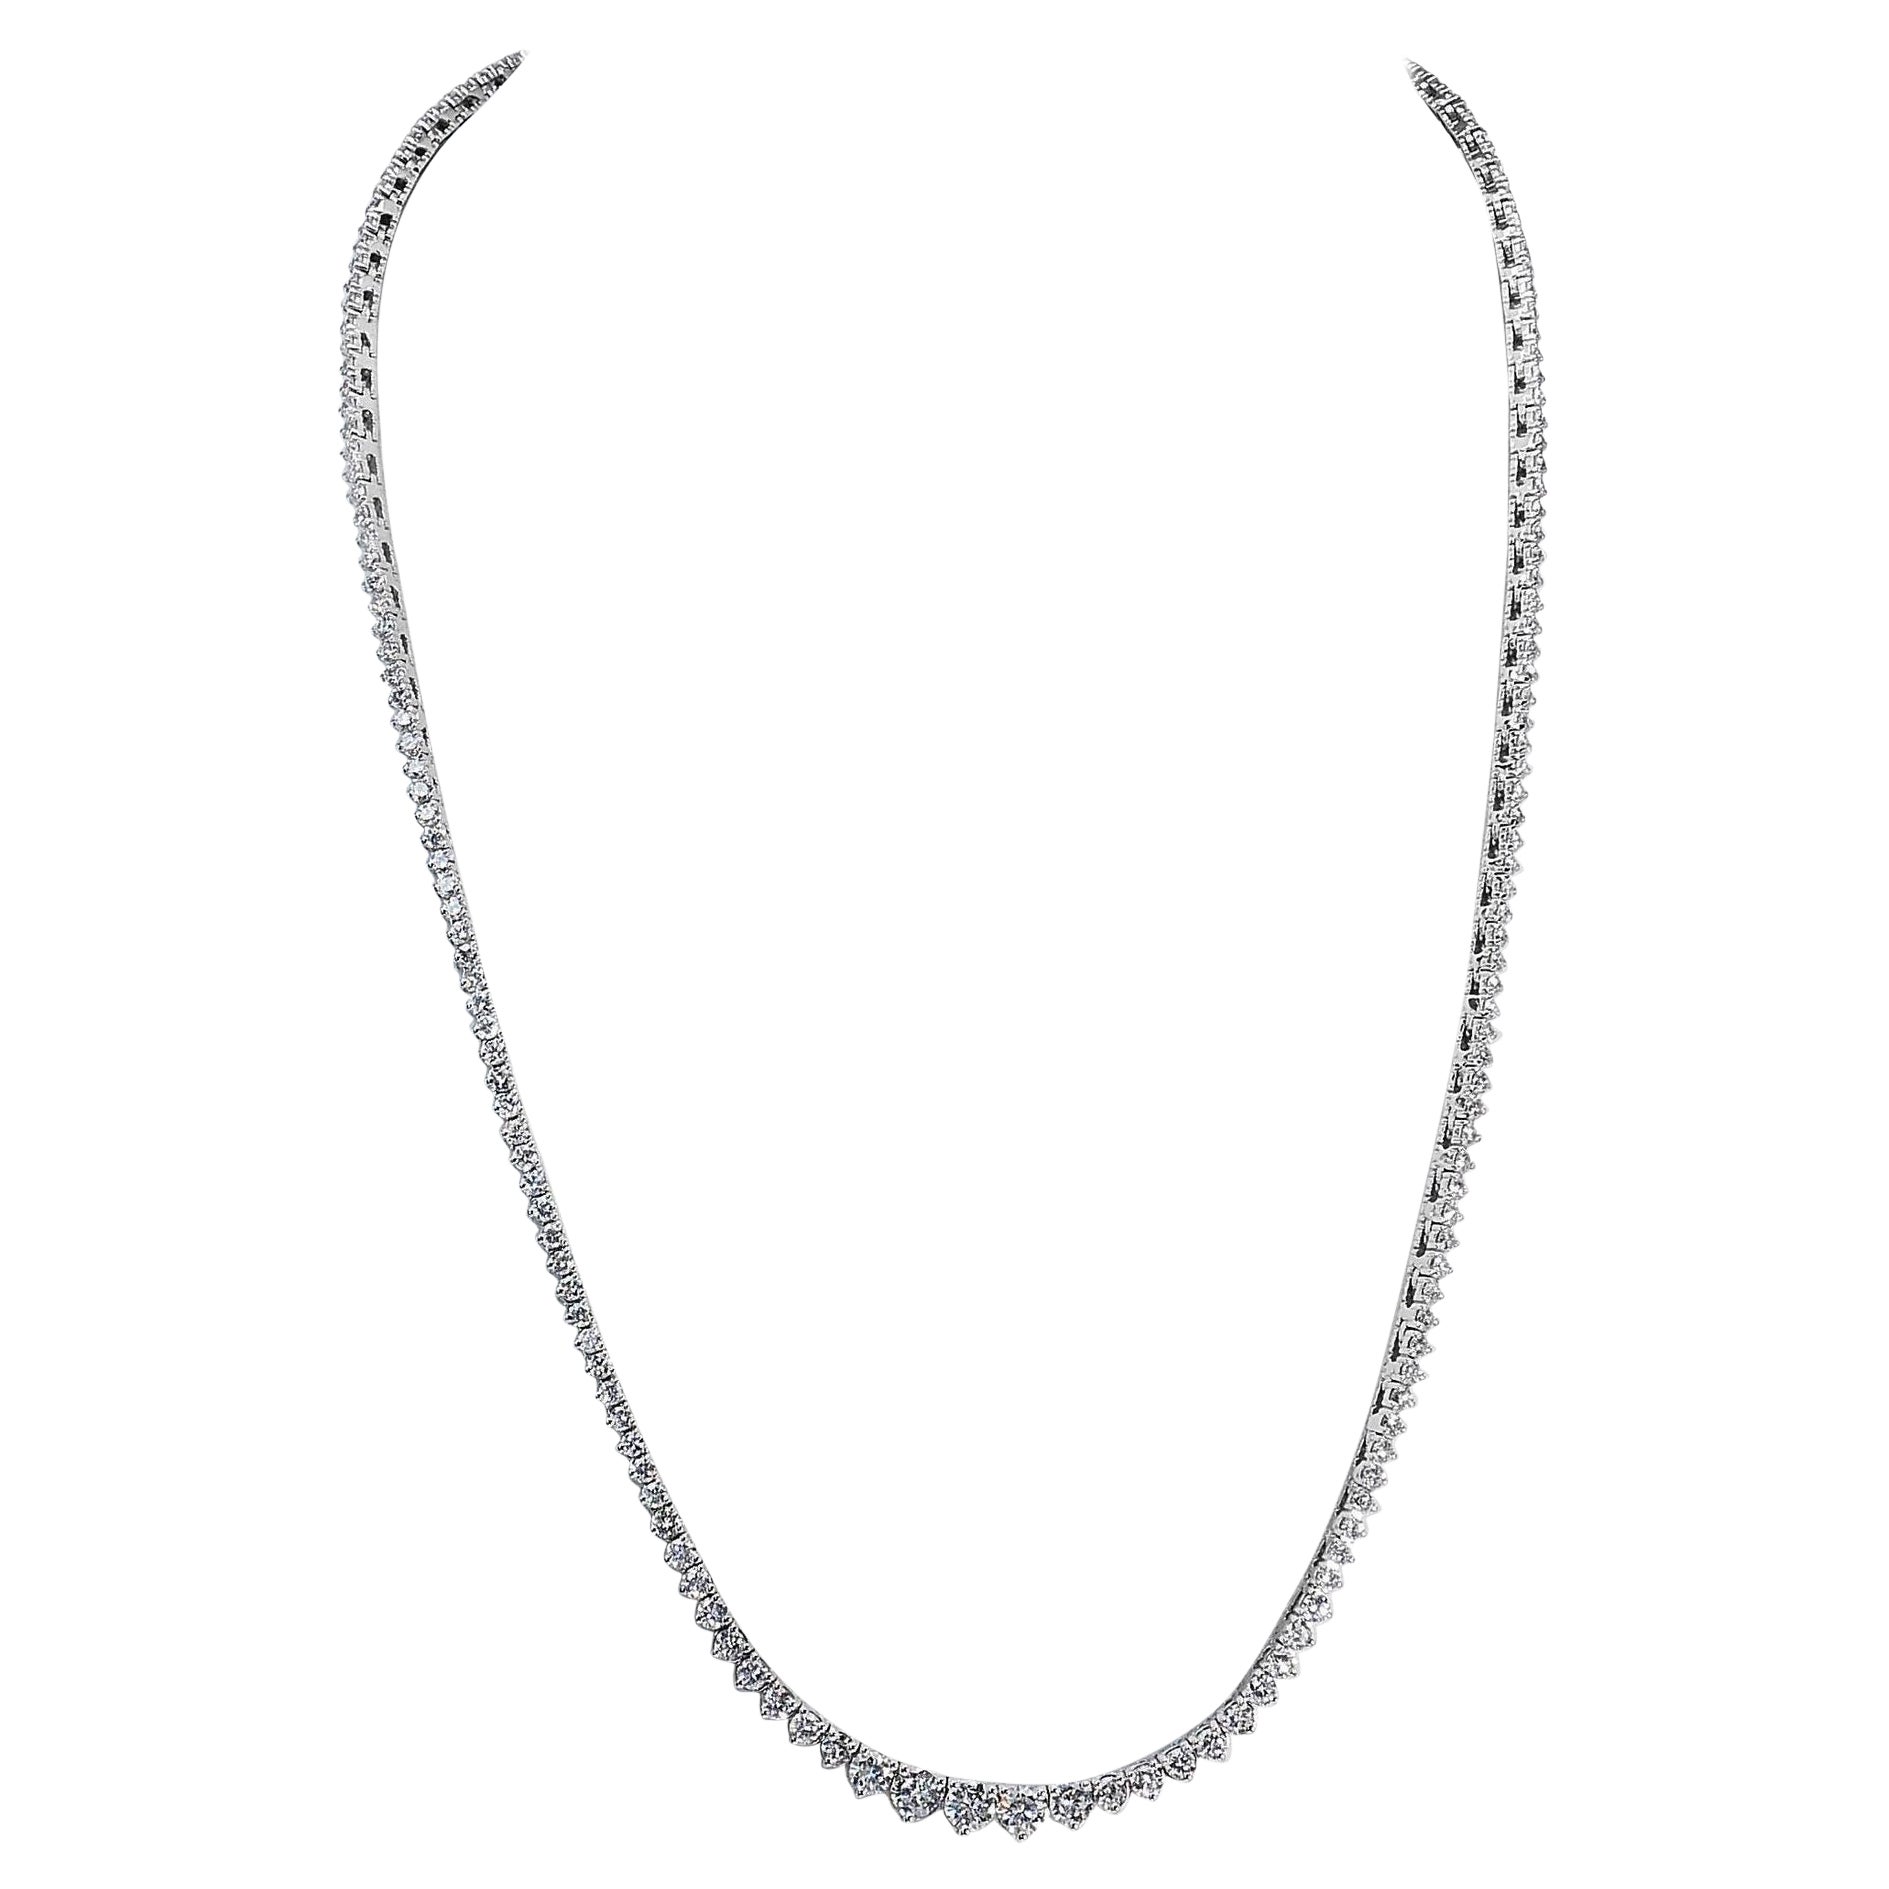 Ravishing 18k White Gold Necklace w/ 5.78 ct Natural Diamonds IGI Certificate For Sale